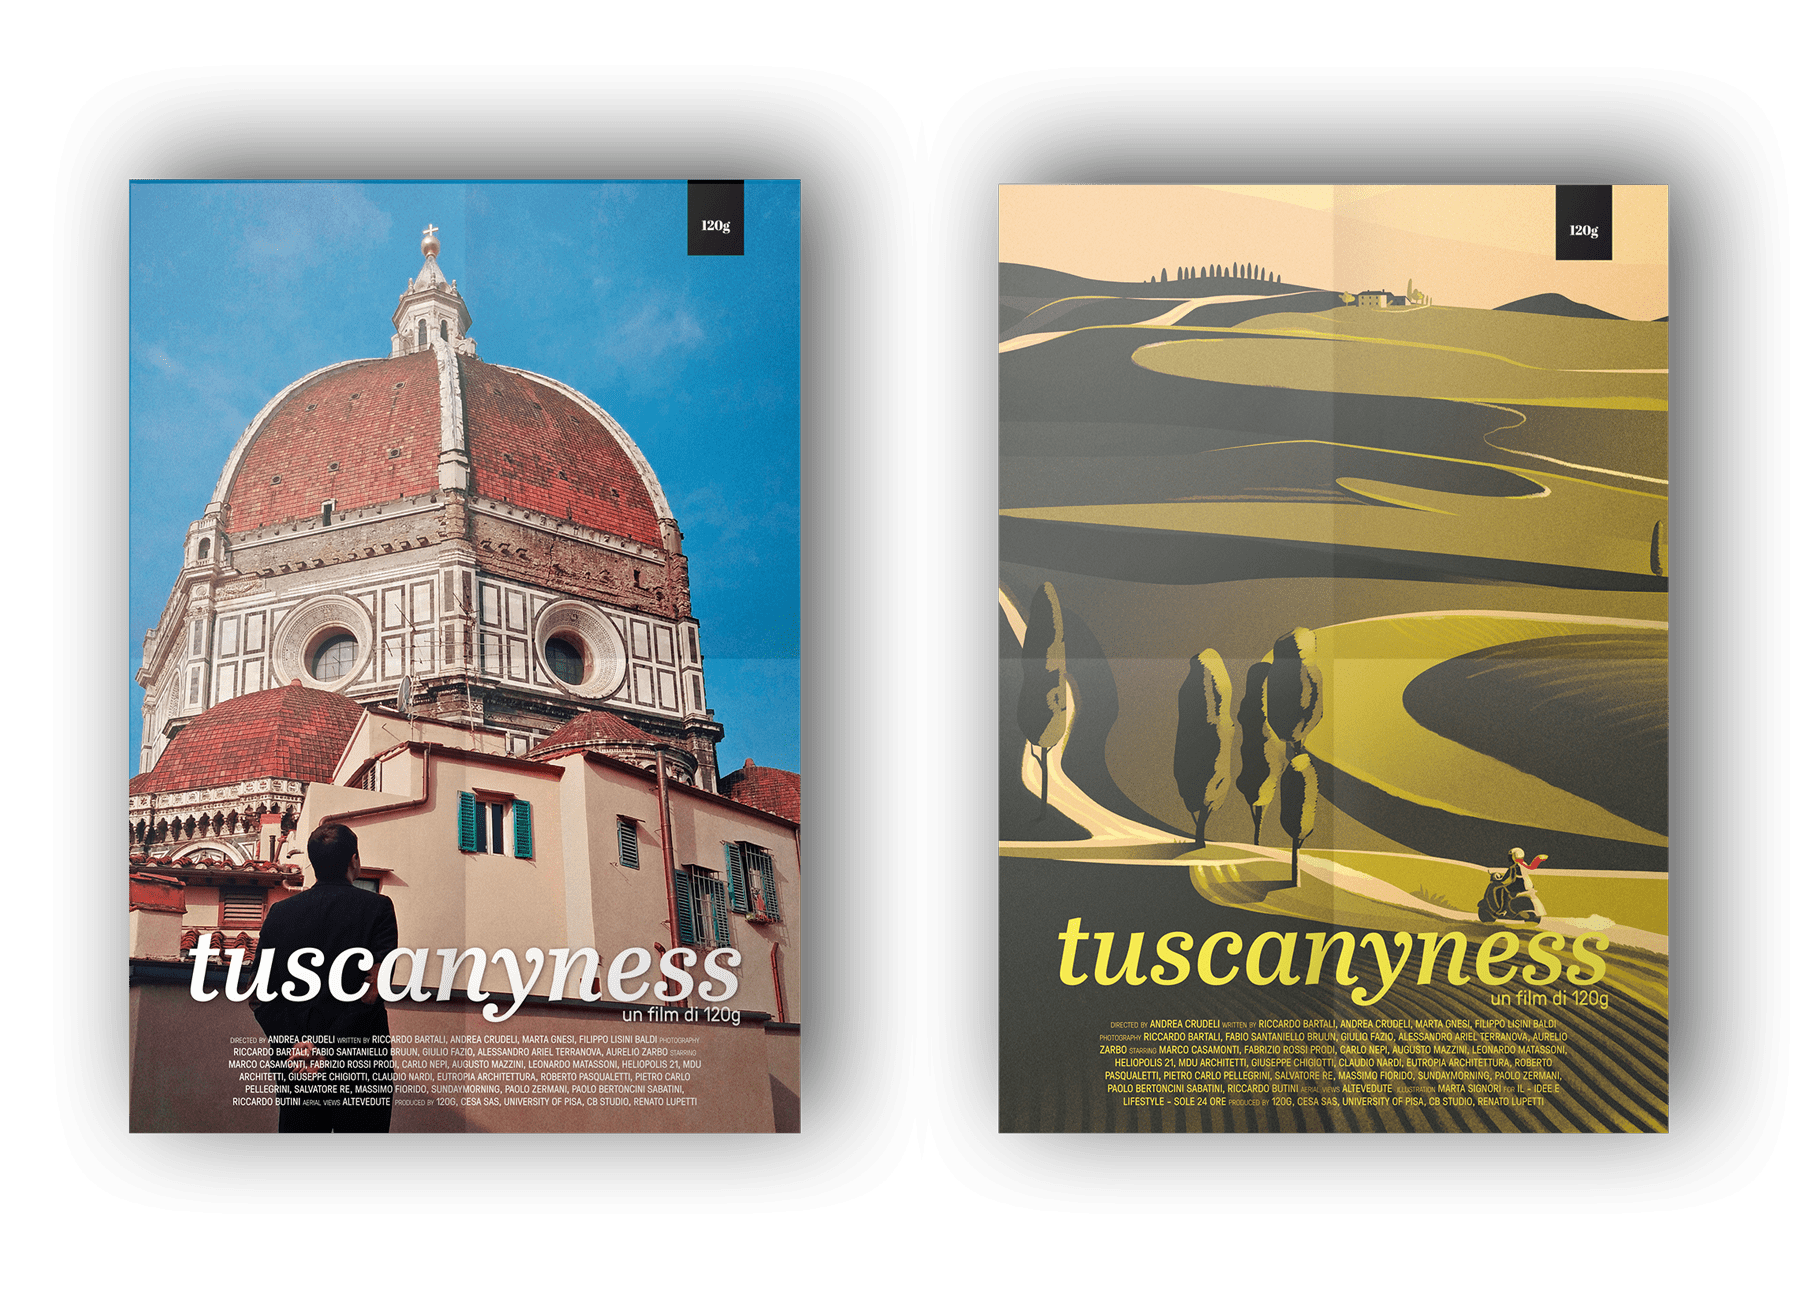 Tuscanyness the movie